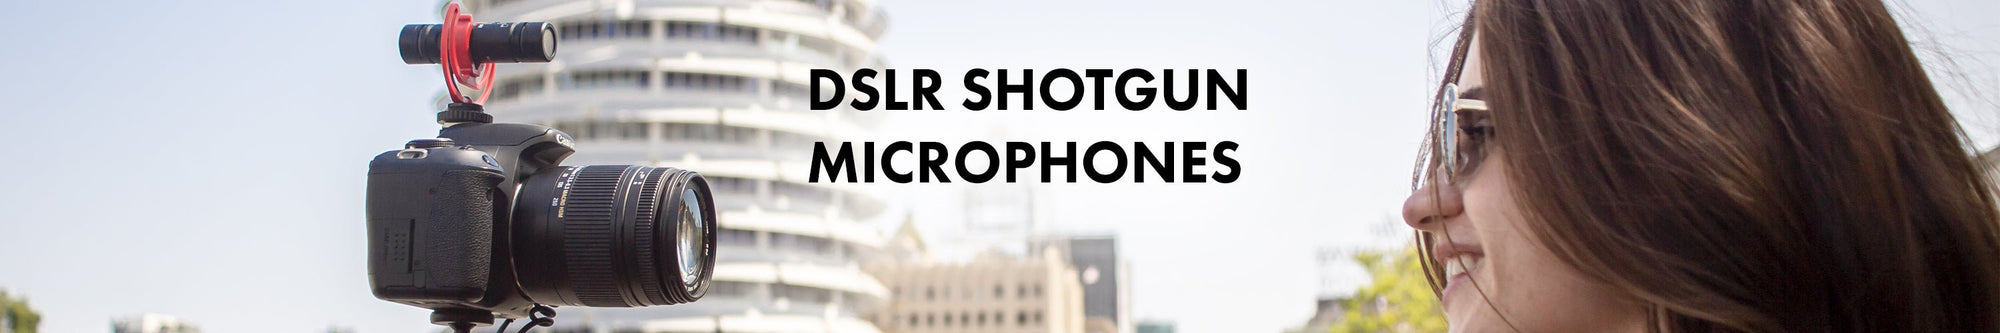 DSLR Shotgun Microphones